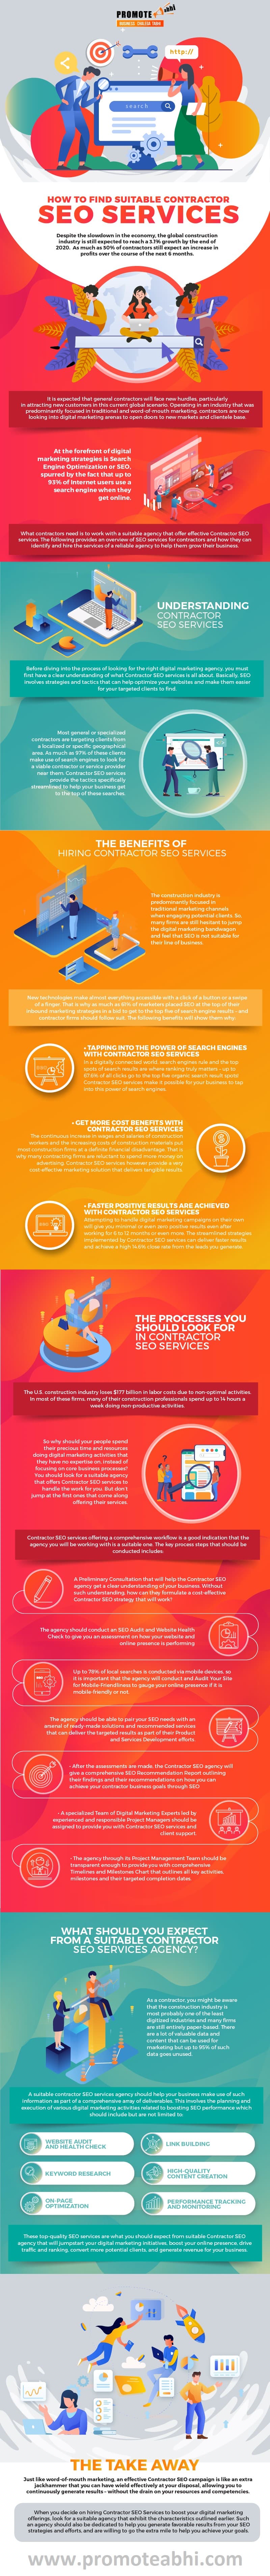 SEO Services Process Infographic - Promote Abhi